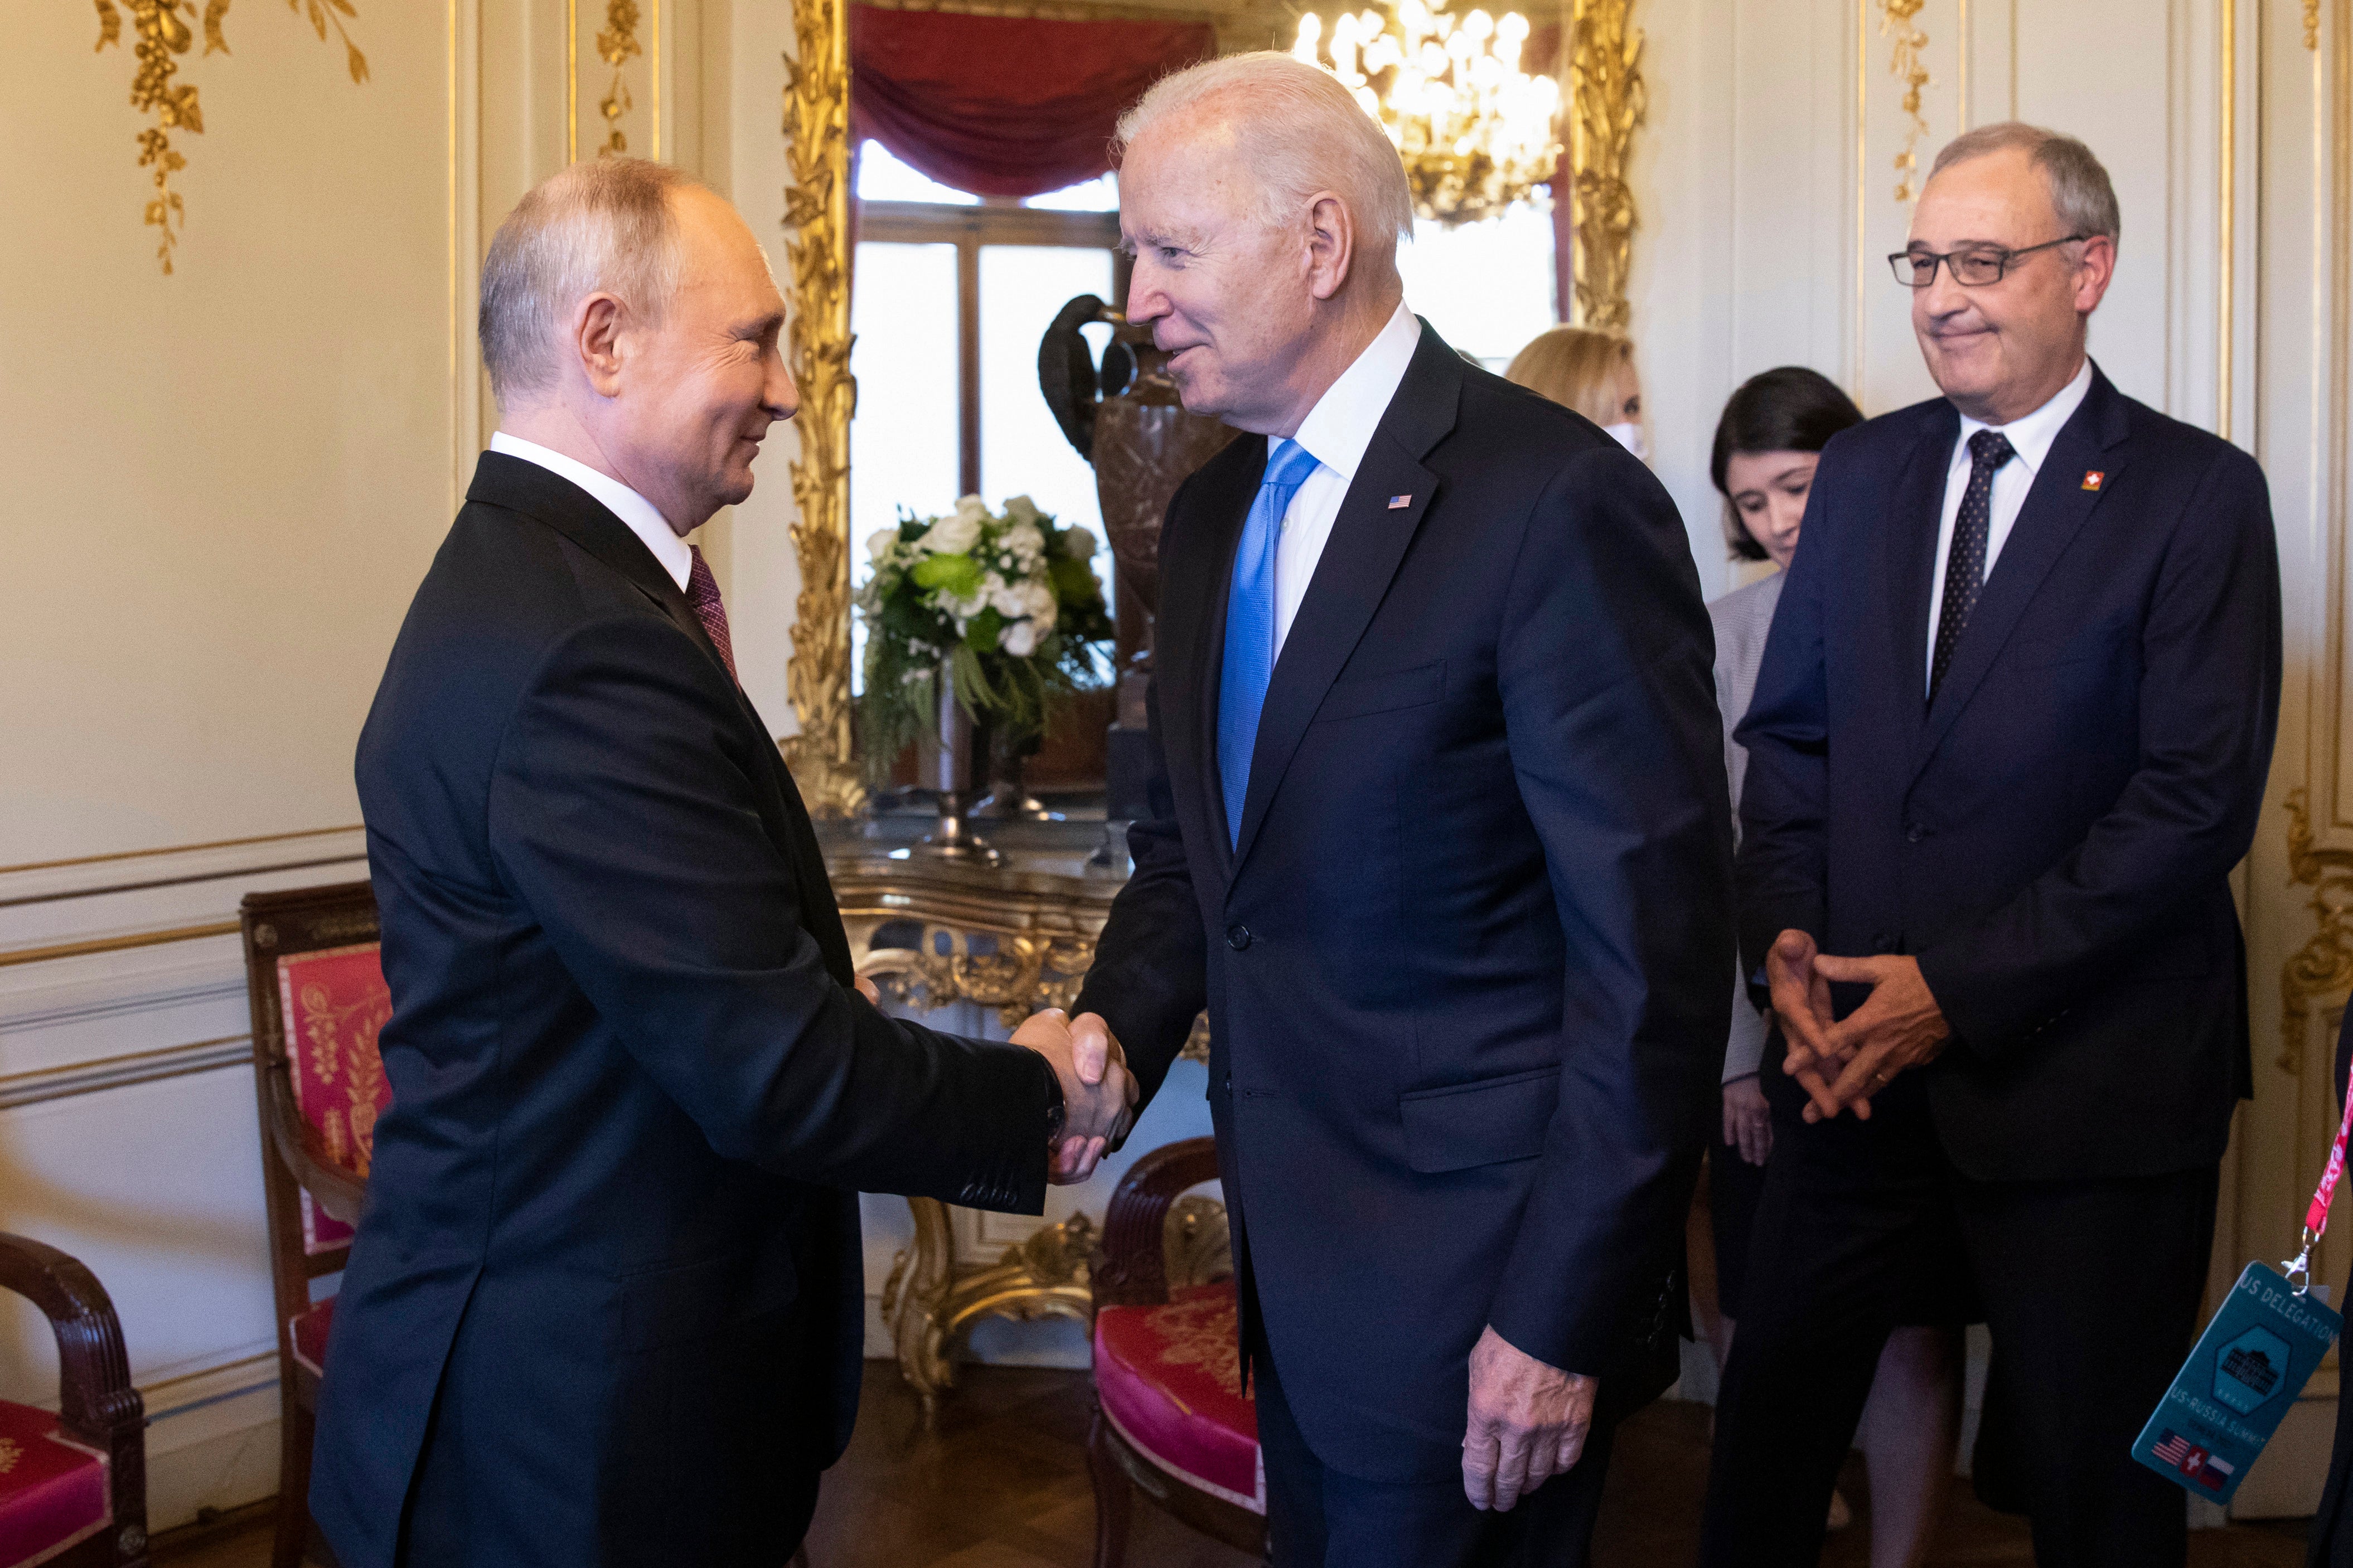 Vladimir Putin shakes hands with Joe Biden during their summit in Geneva